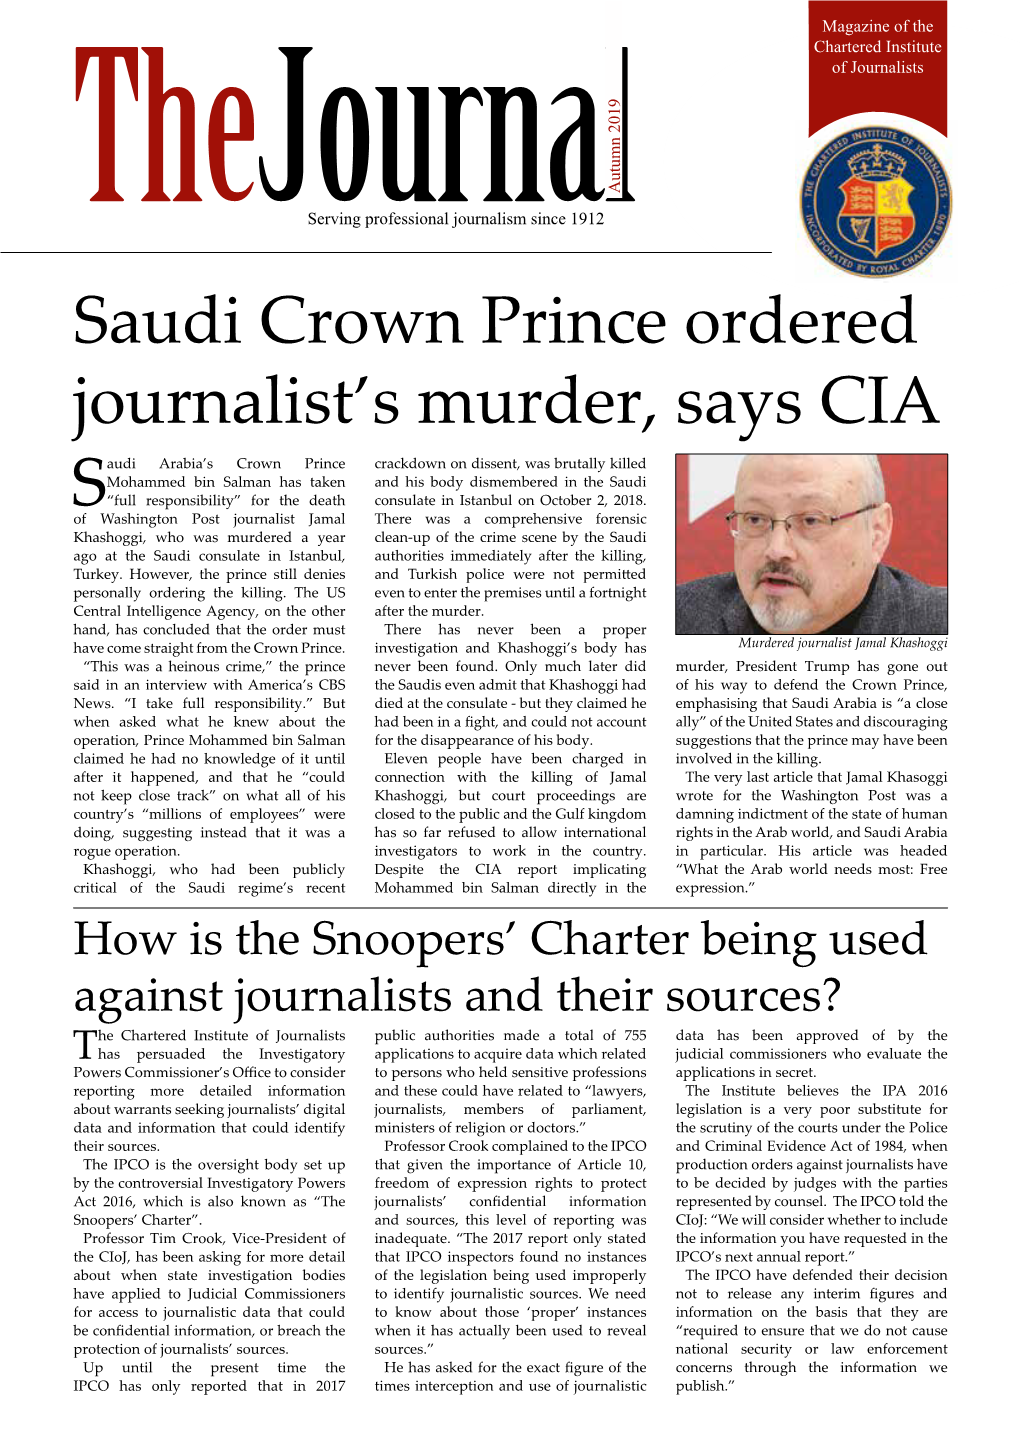 Saudi Crown Prince Ordered Journalist's Murder, Says